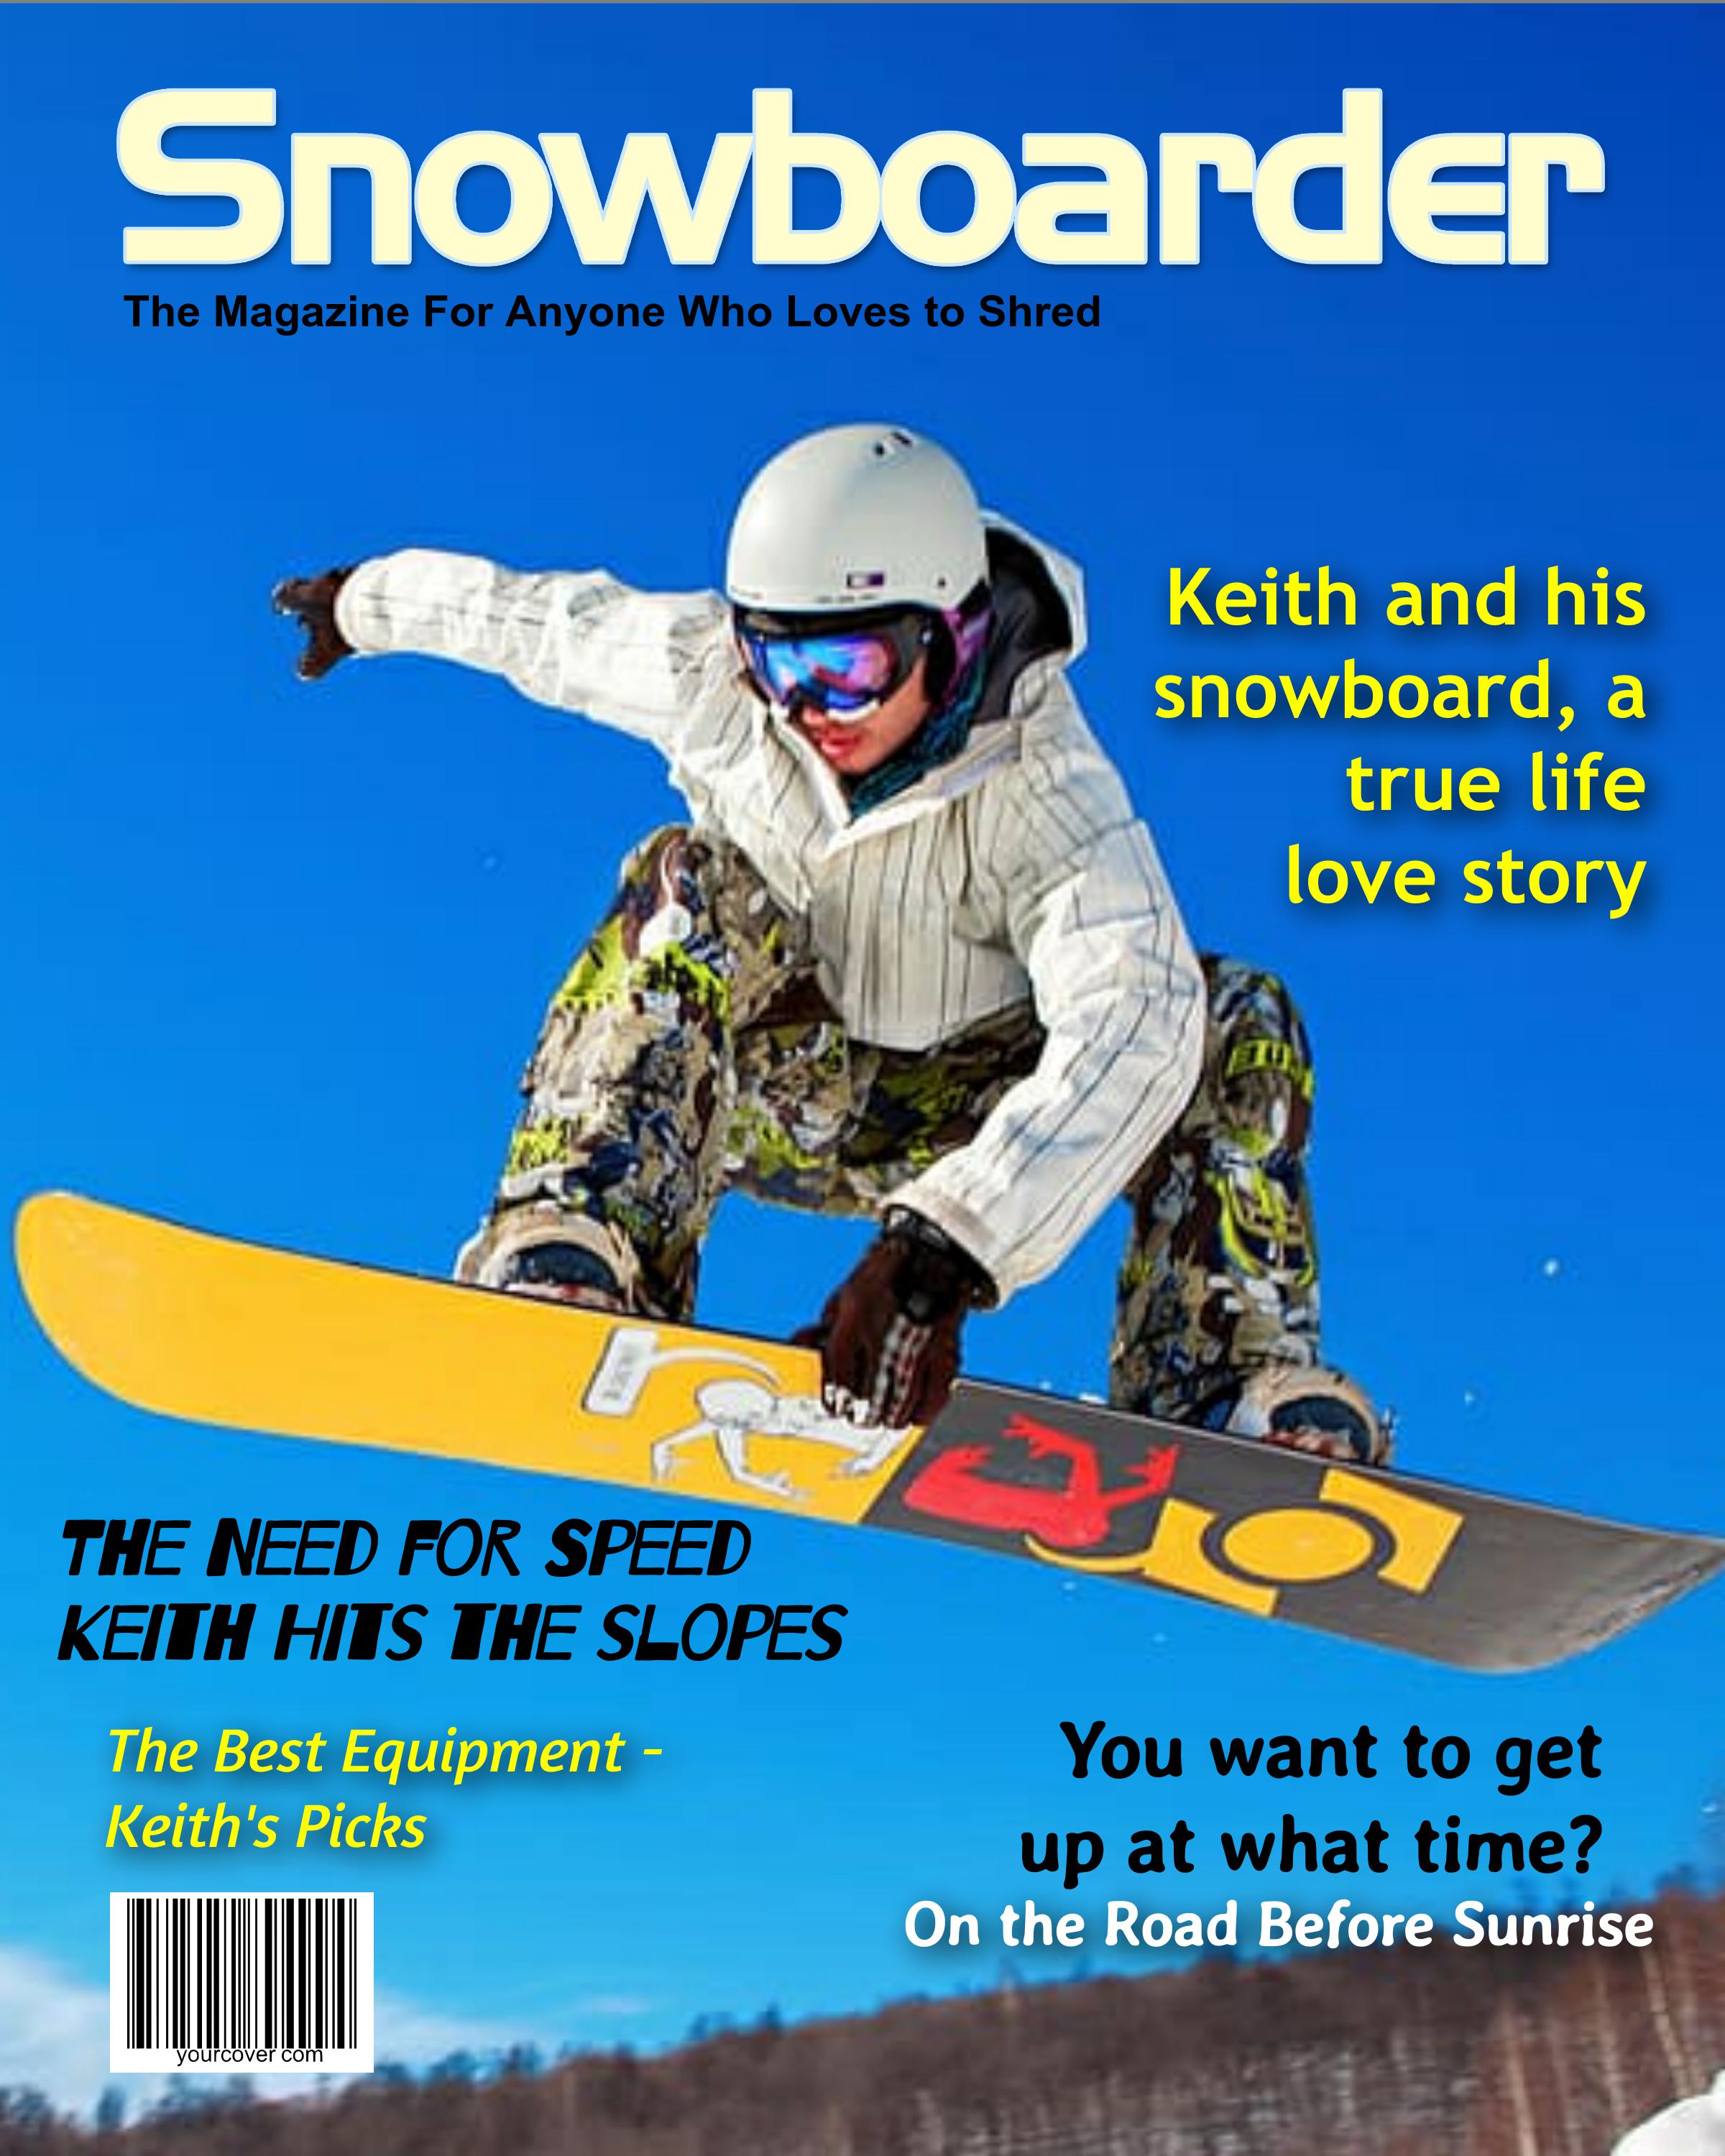 Snowboarder Personalized Magazine Cover